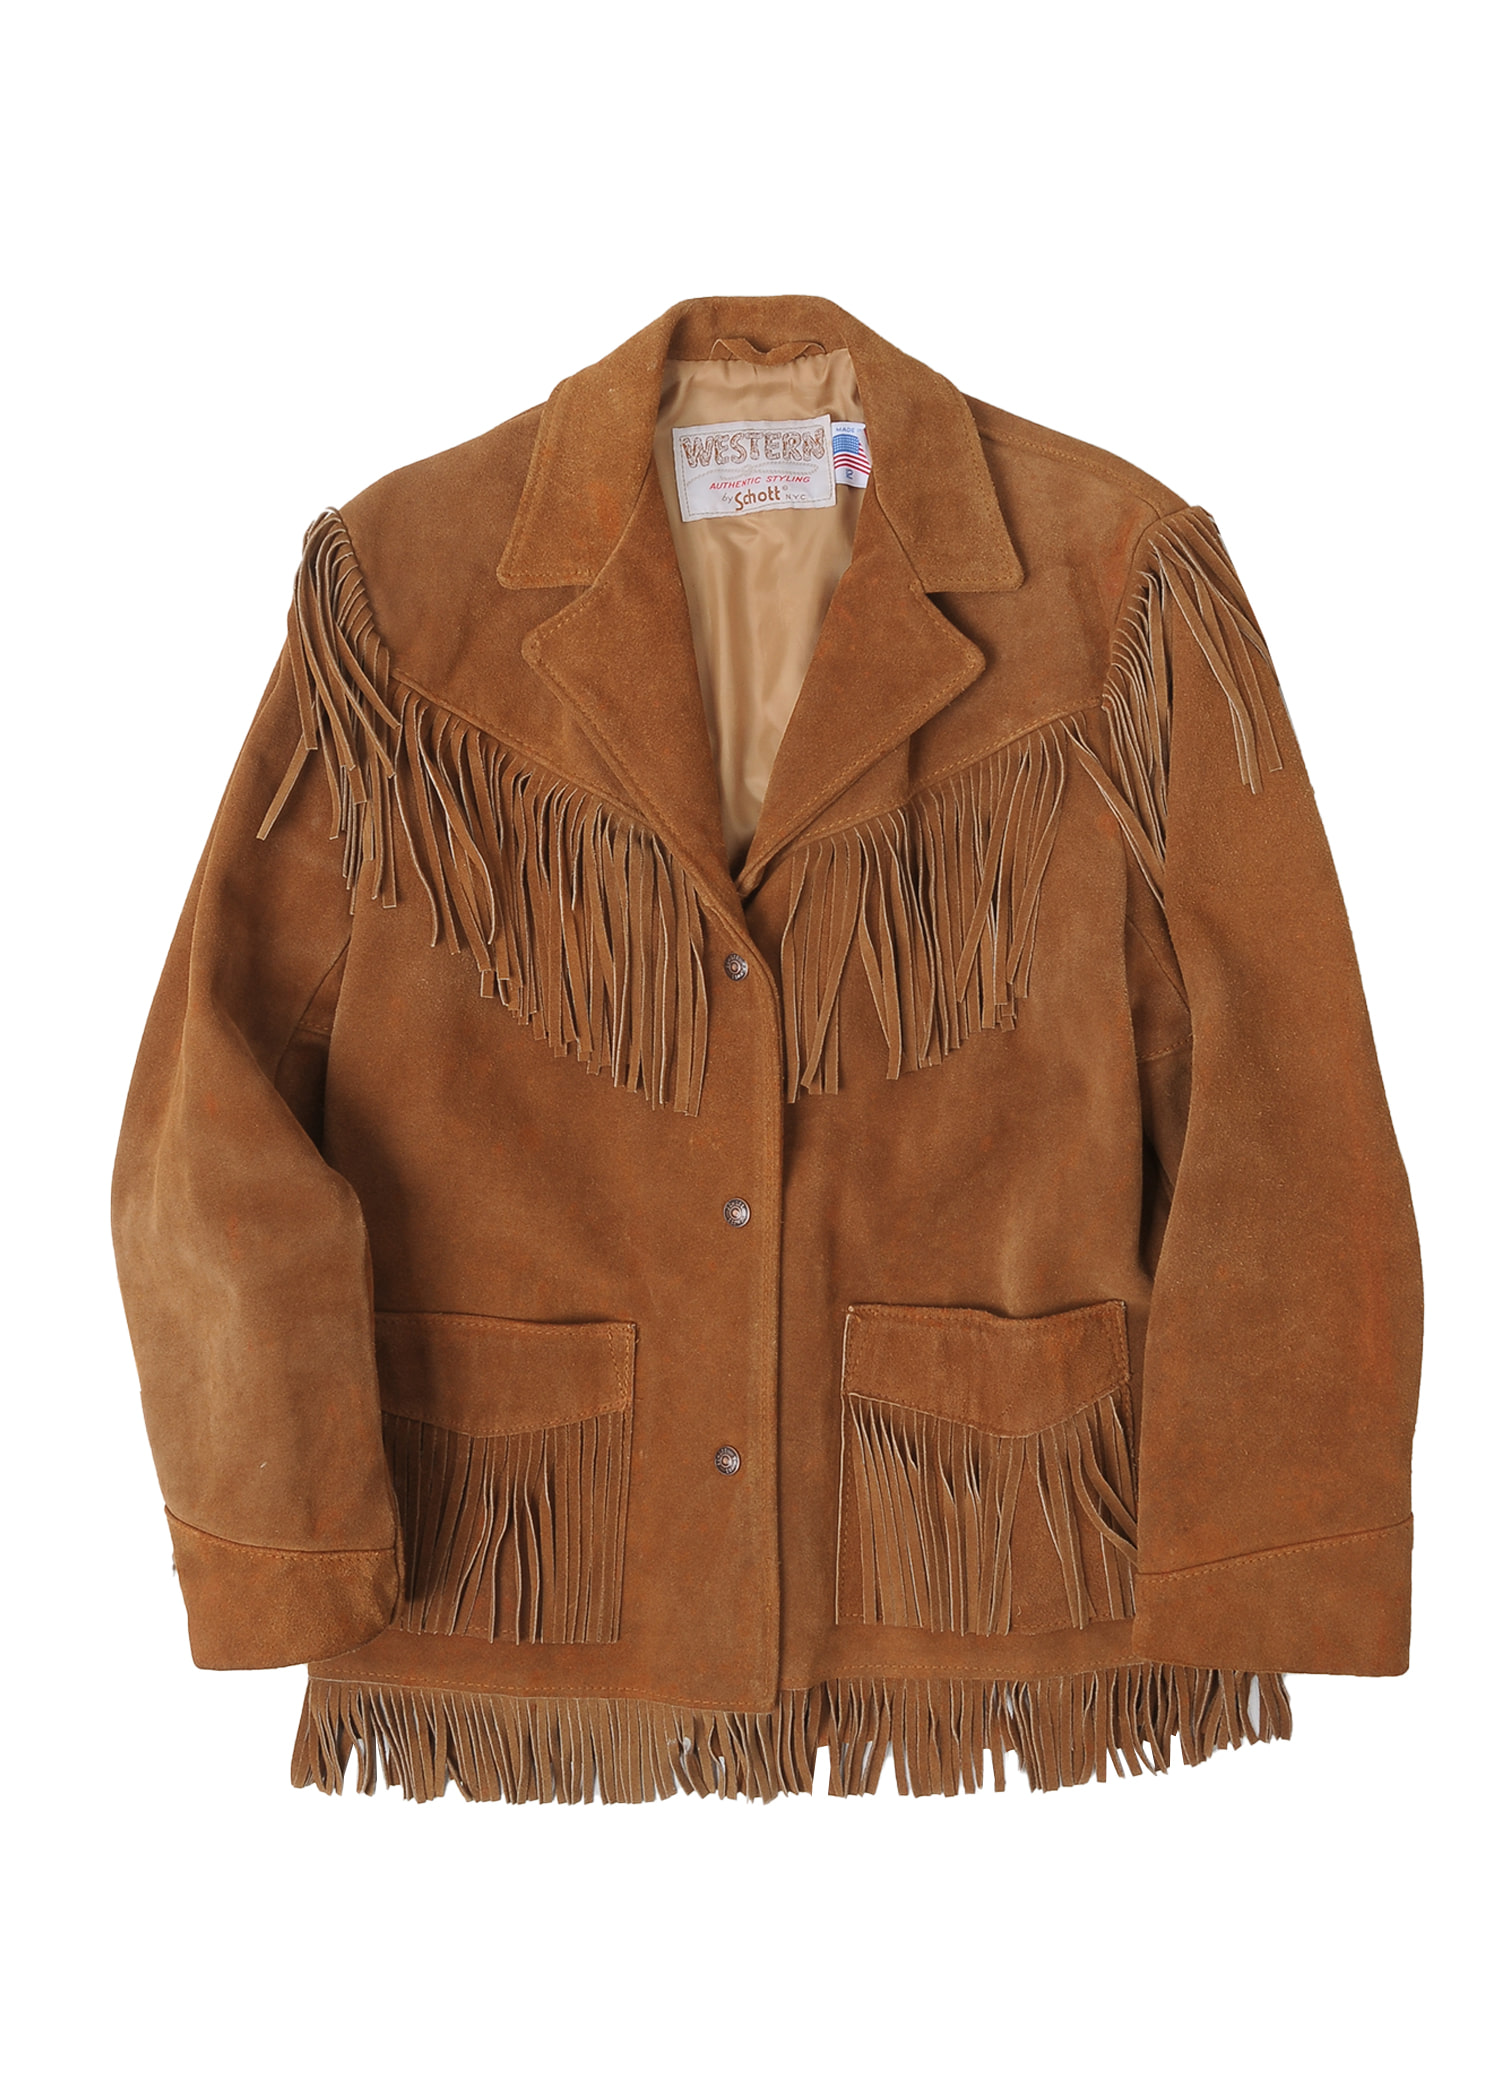 Schott western fringe jacket